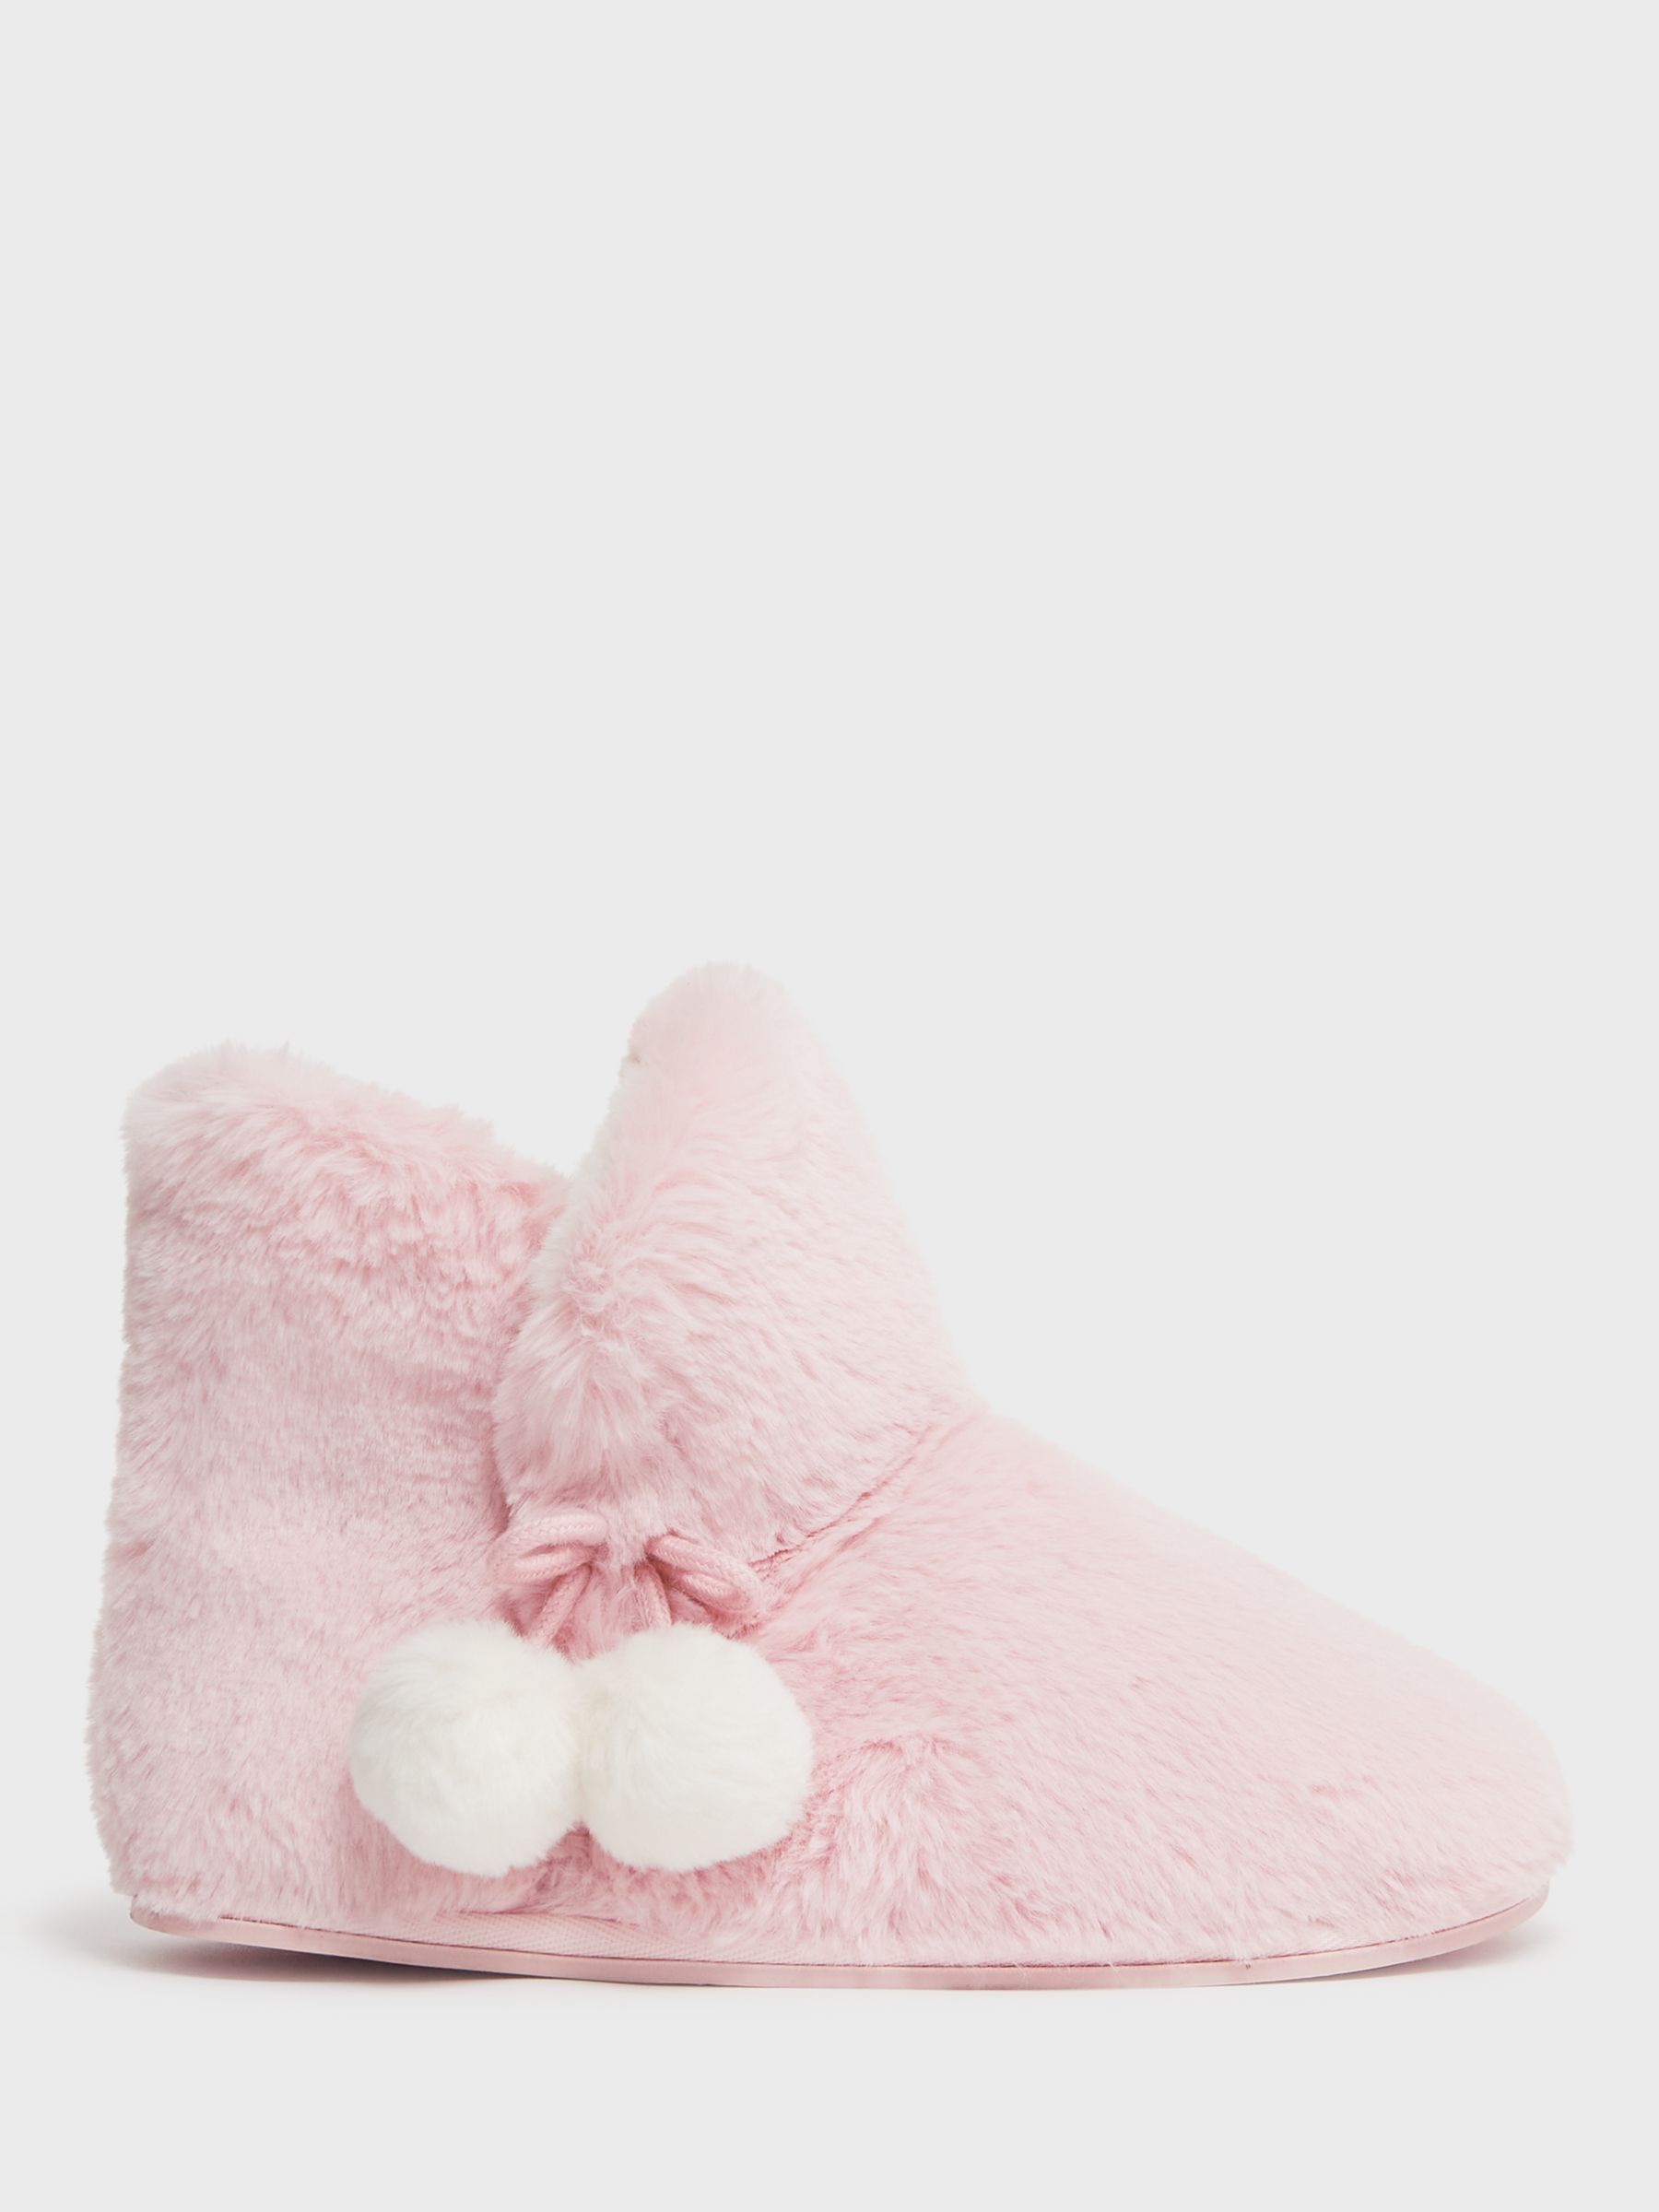 Pale Pink Warm Sweater Bra Fluffy Fur Slippers White Sheet Stock